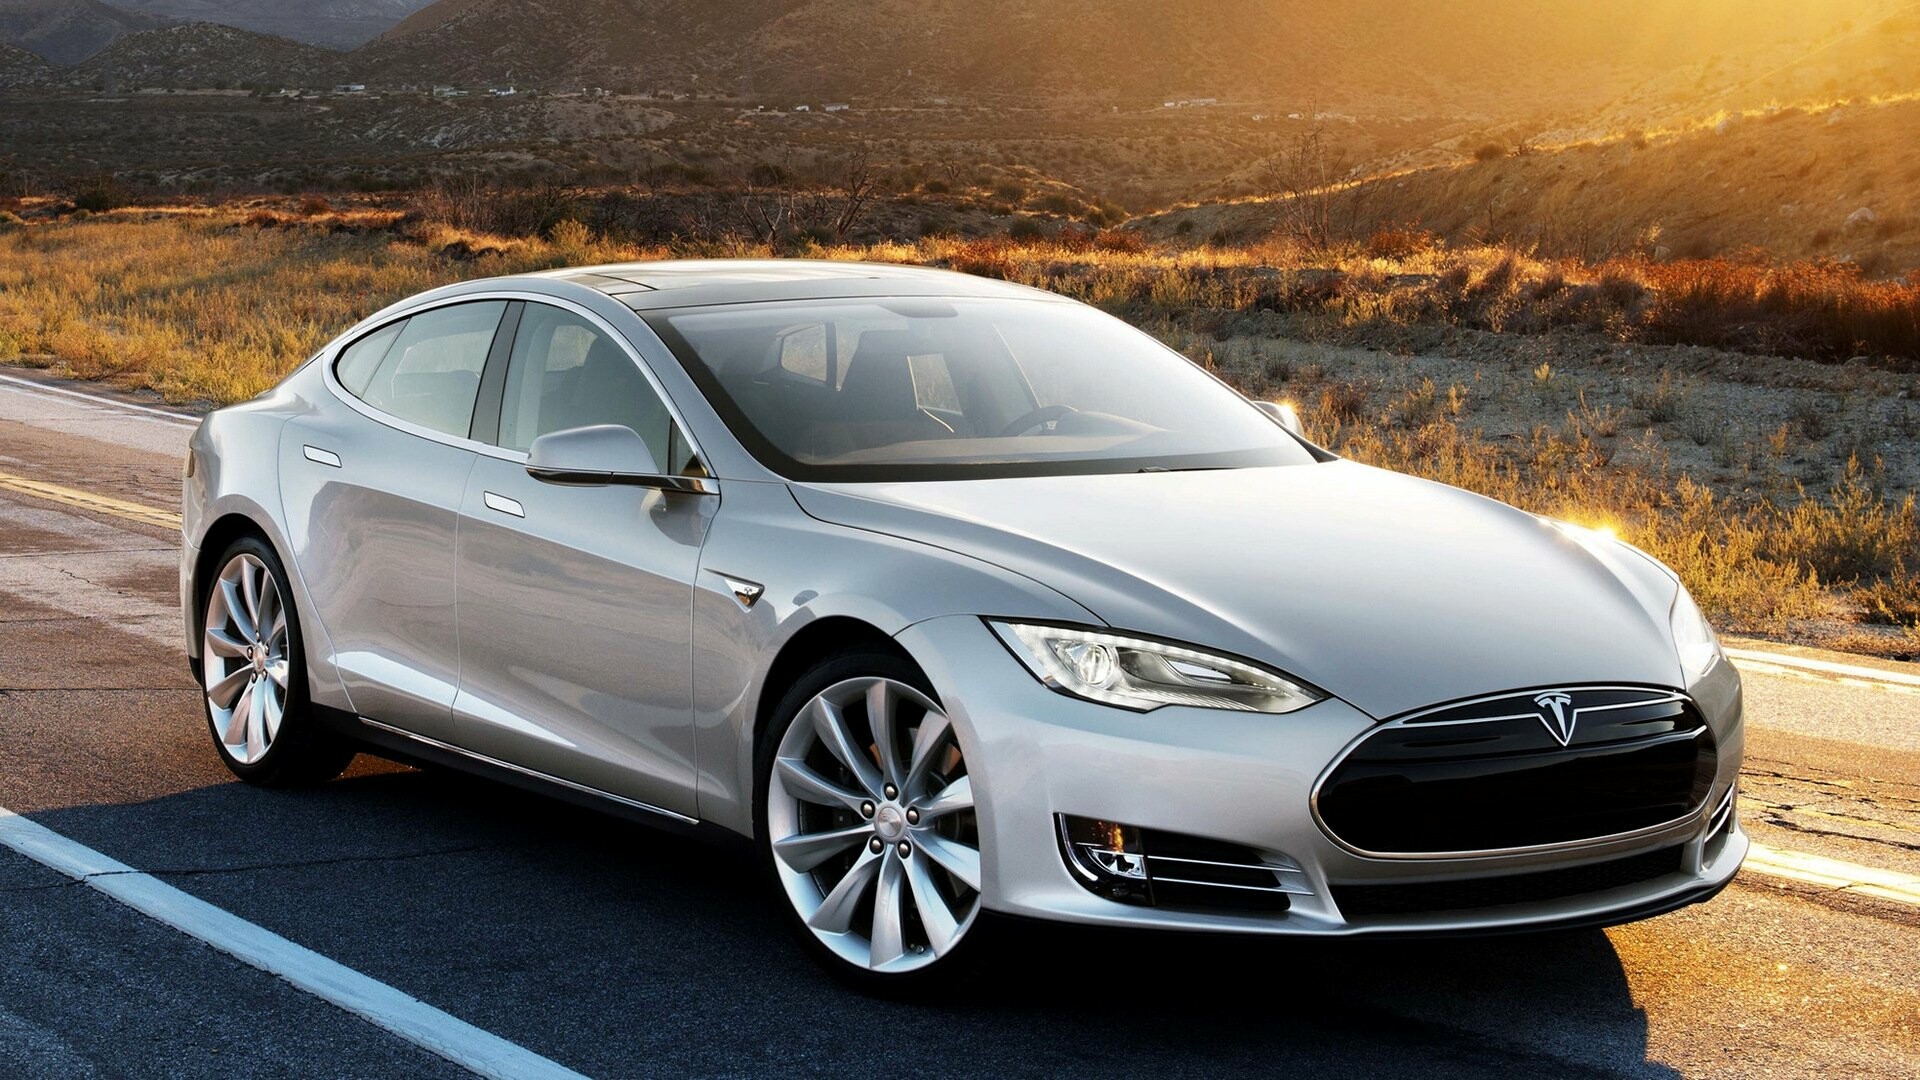 Tesla Model S: The American electric sedan, Debuted on June 22, 2012. 1920x1080 Full HD Wallpaper.